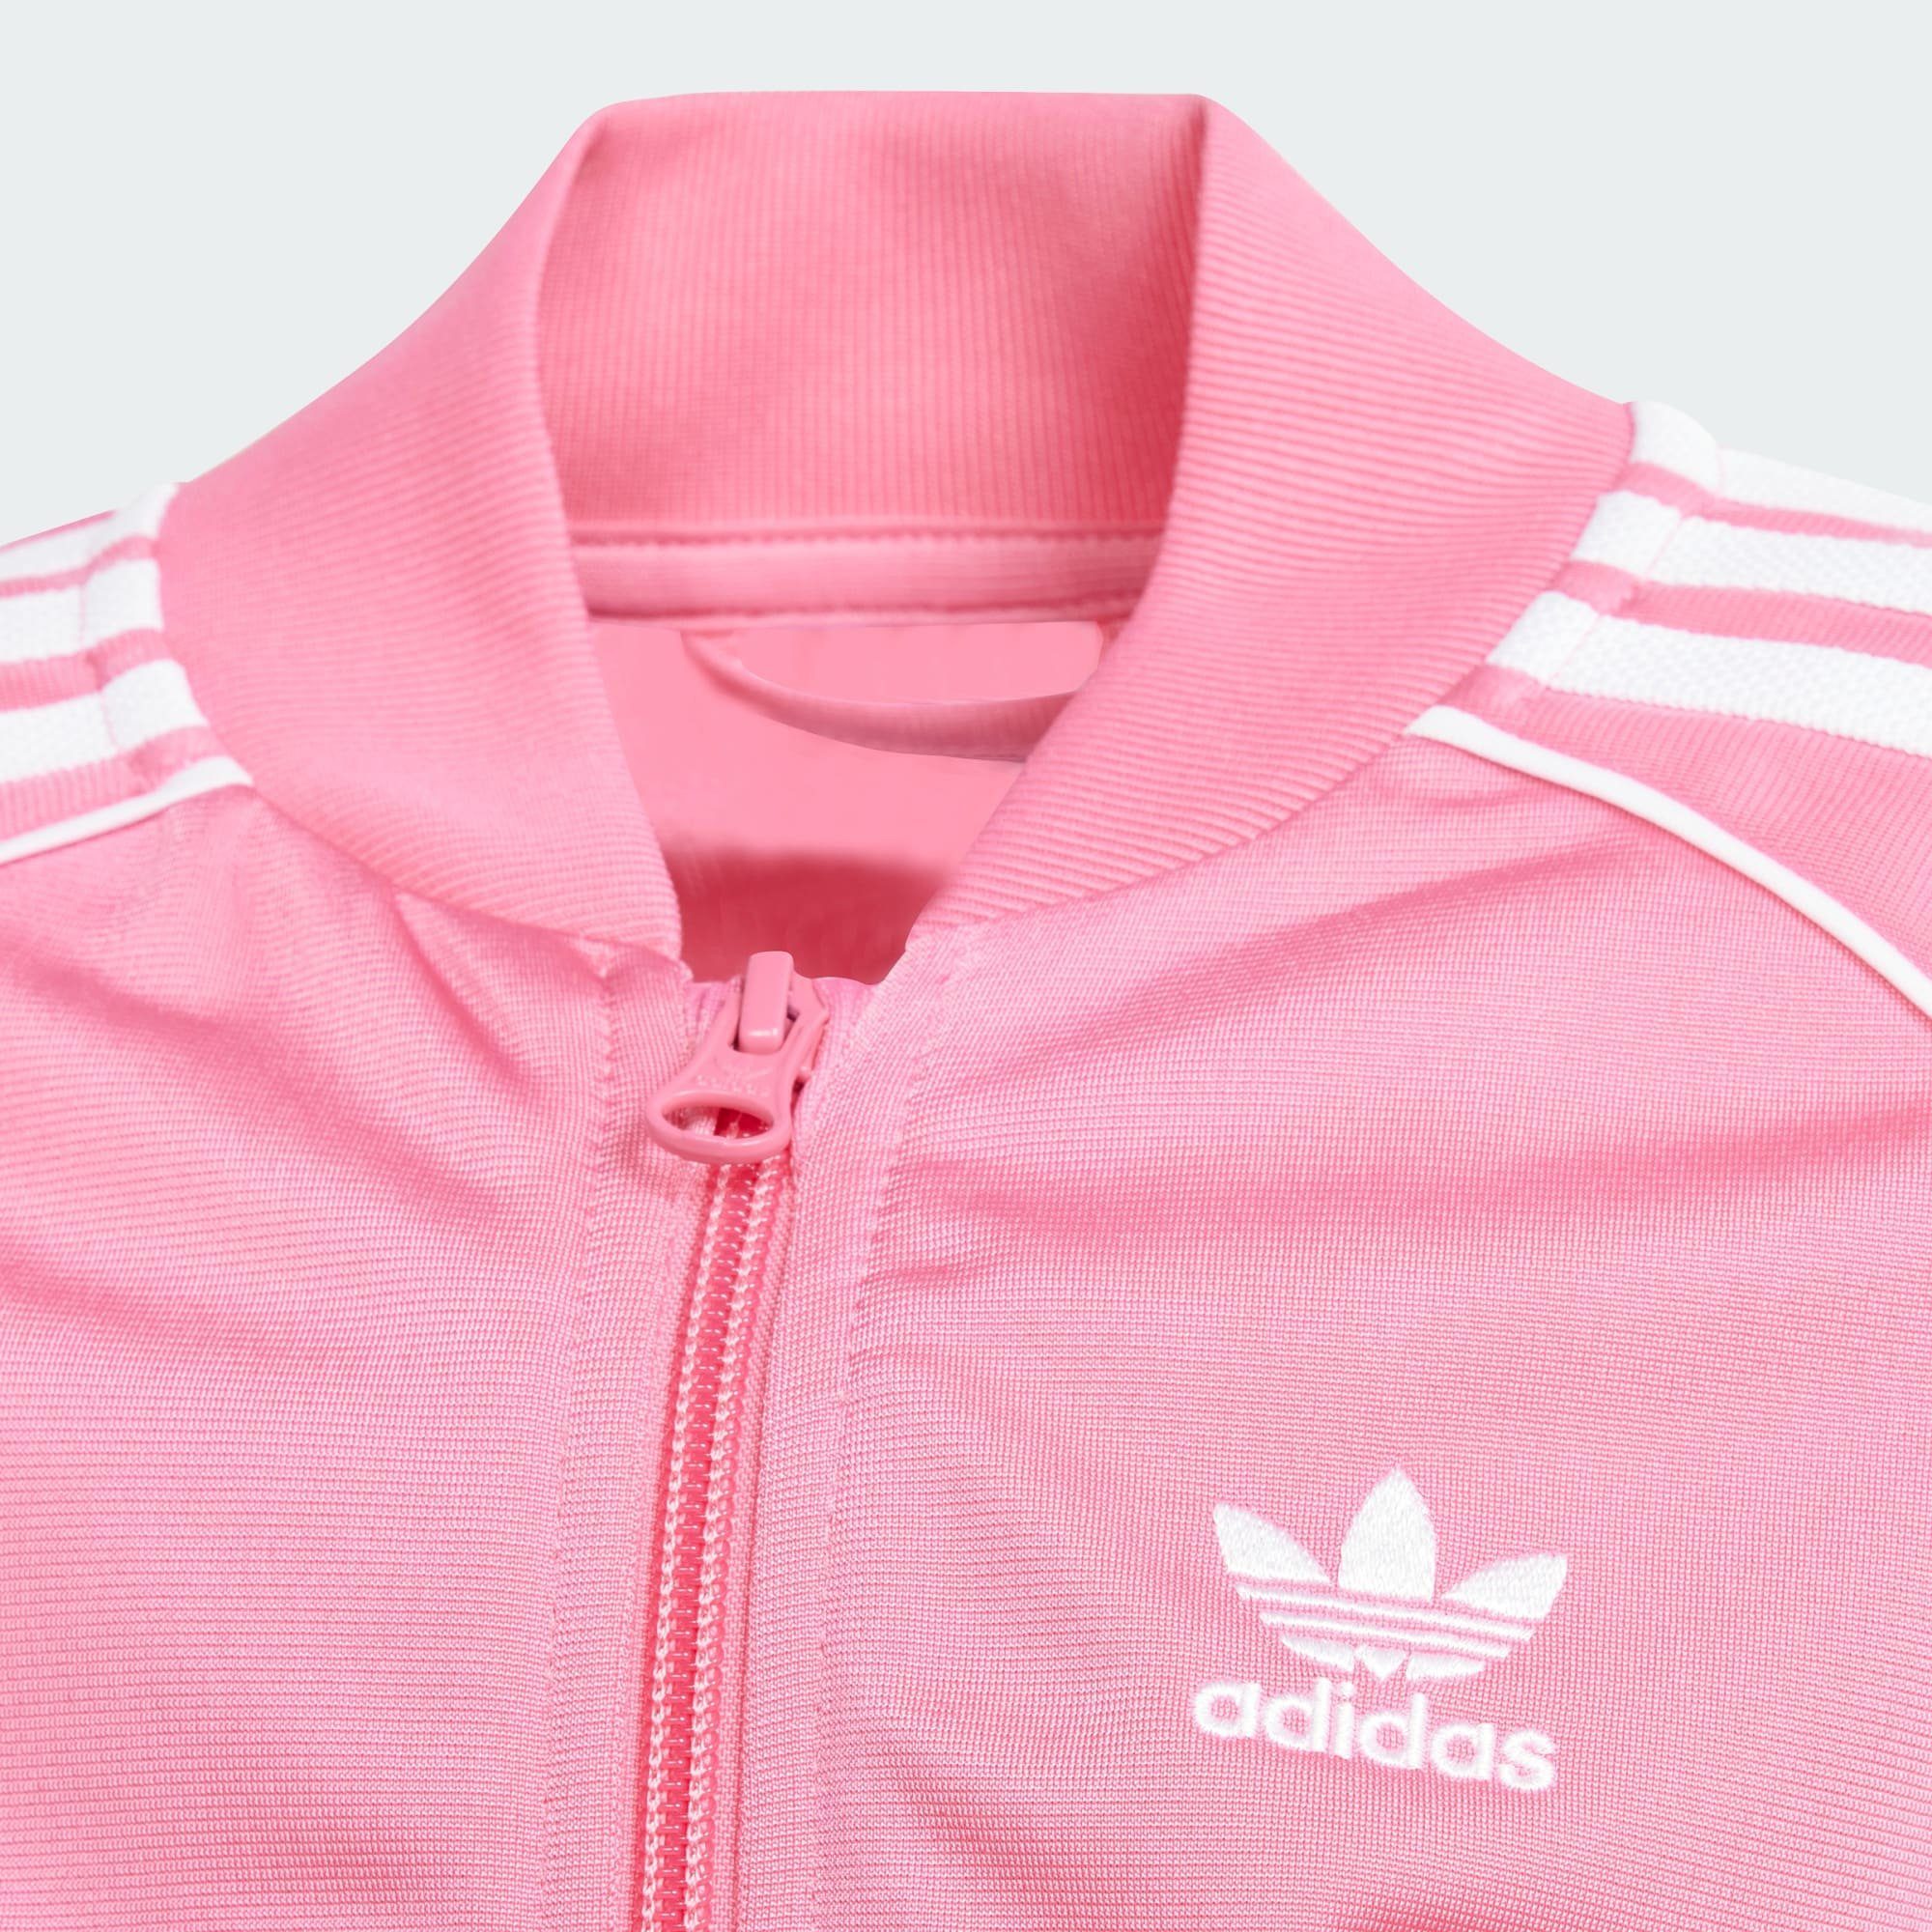 adidas Originals Sportanzug ADICOLOR SST Fusion TRAININGSANZUG Pink